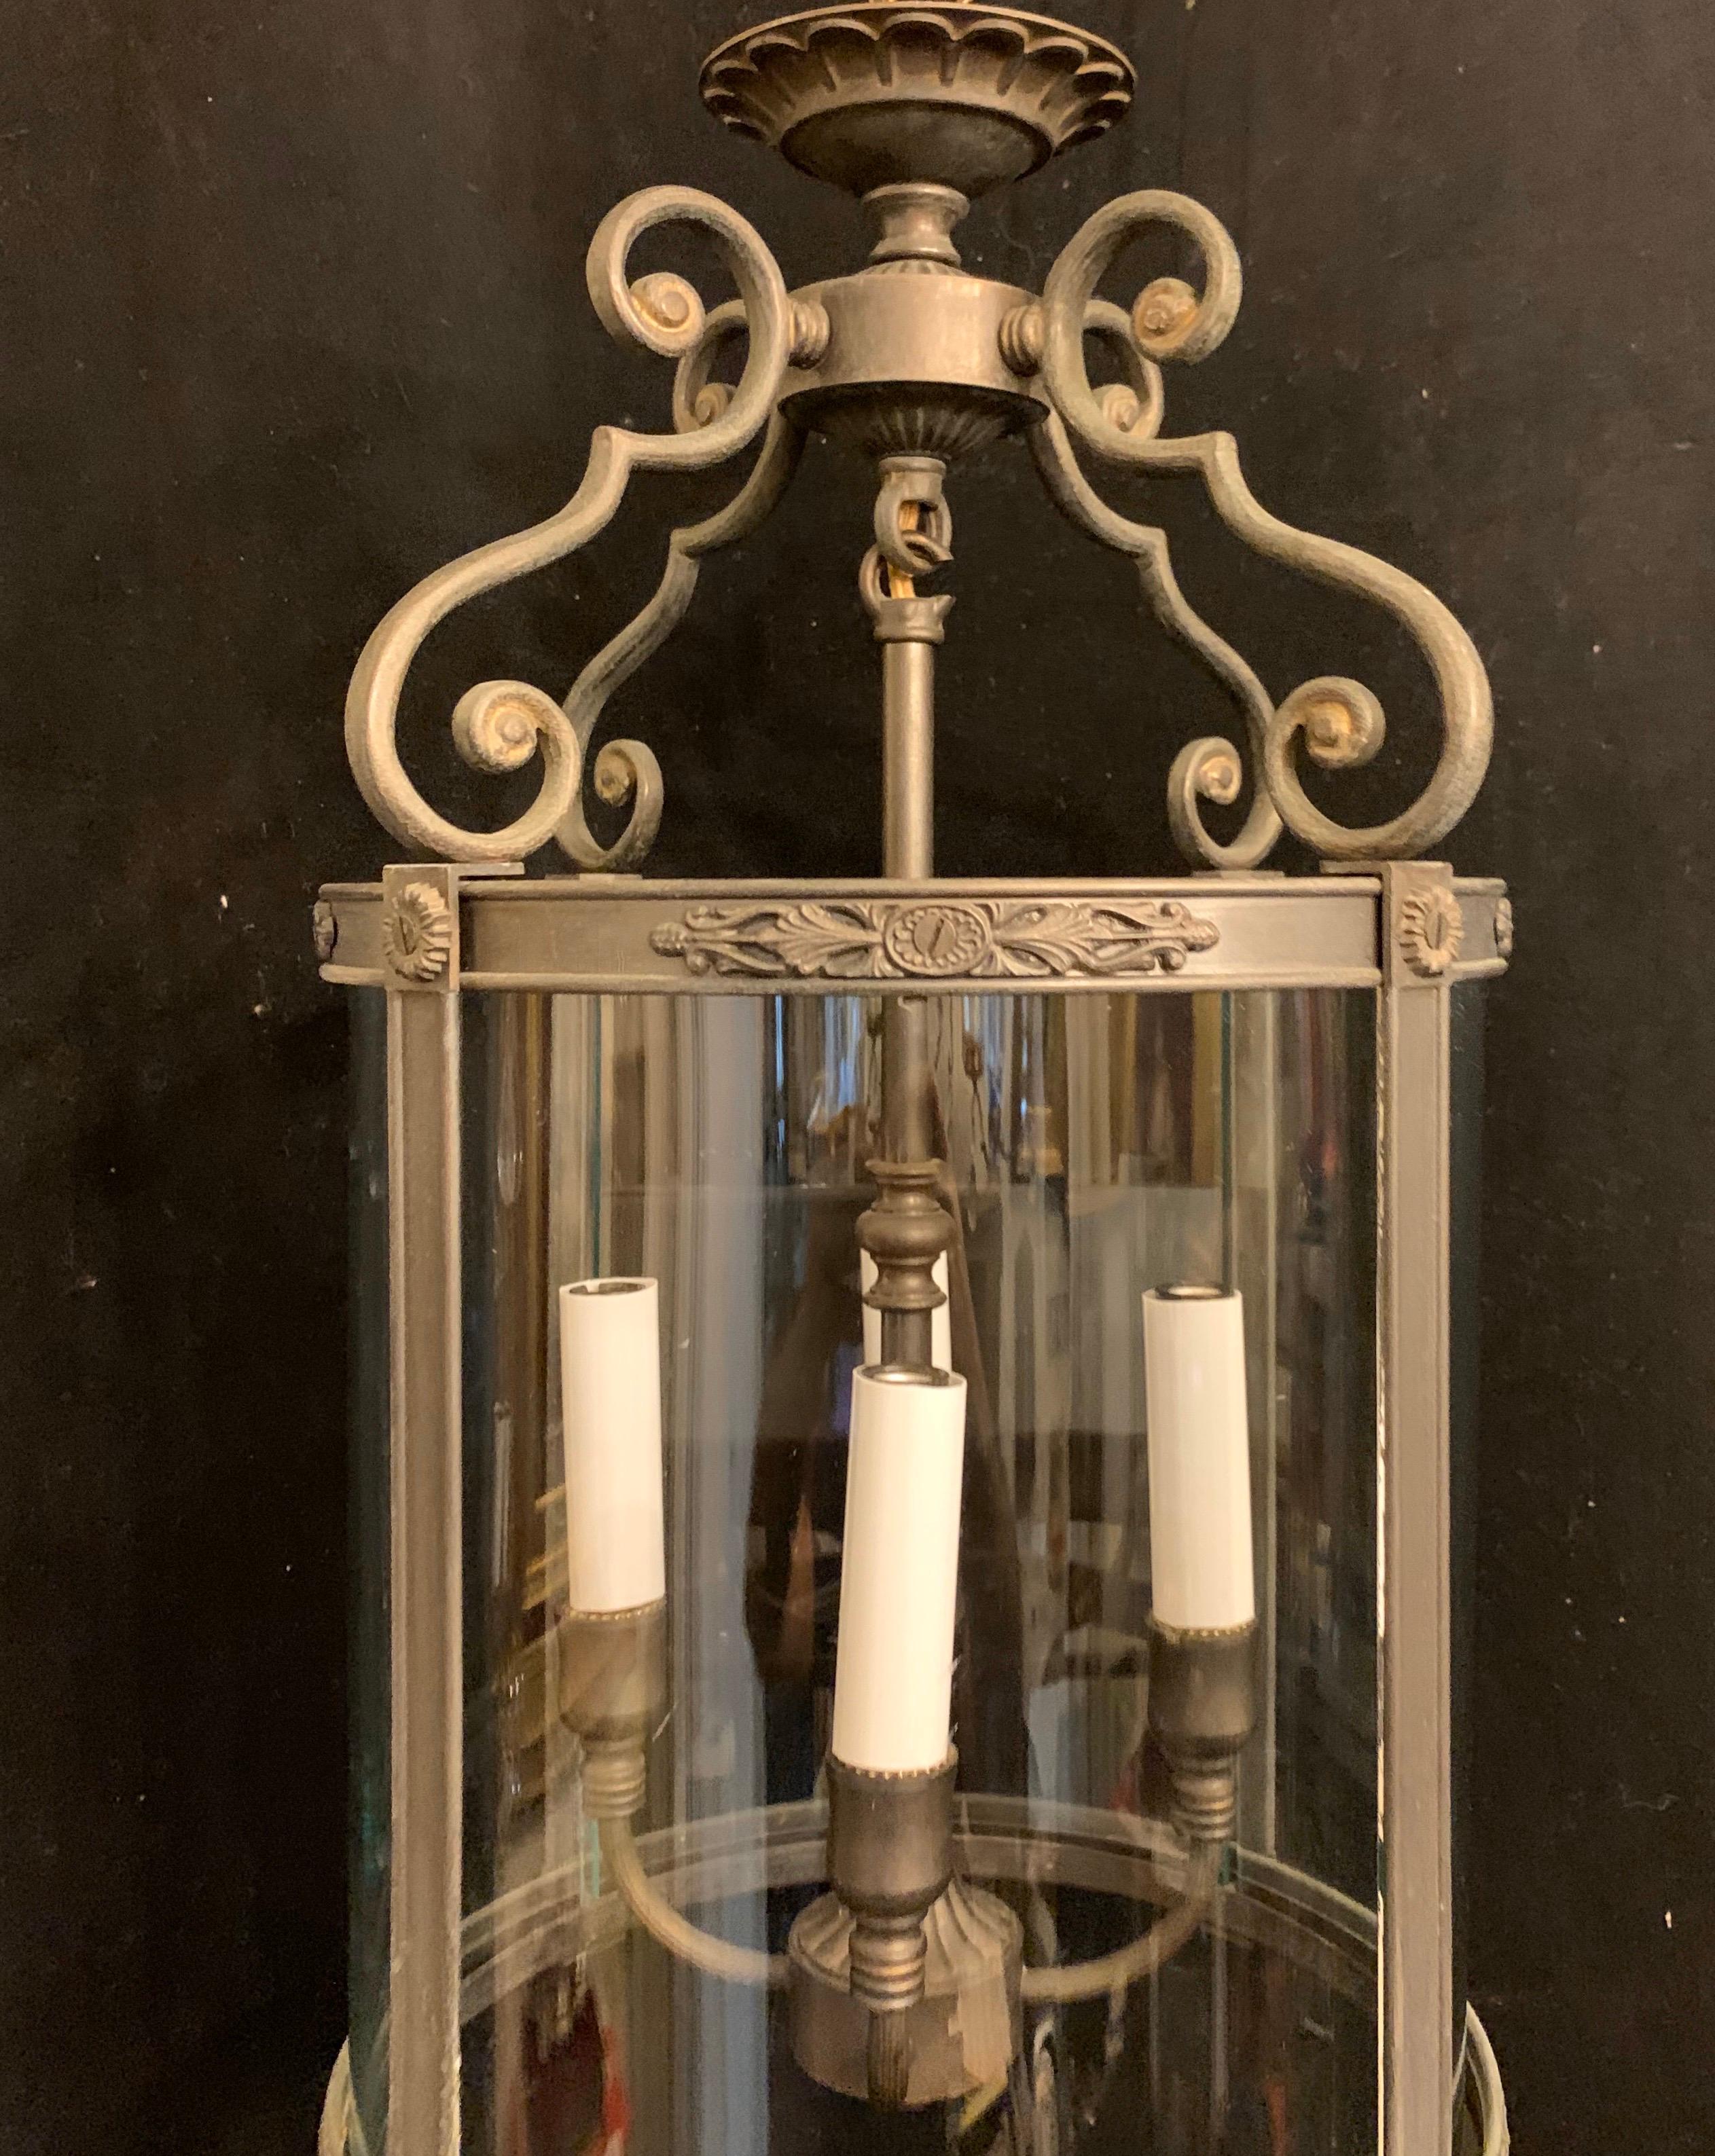 A wonderful patinated bronze petite rounded glass 3-light lantern fixture.